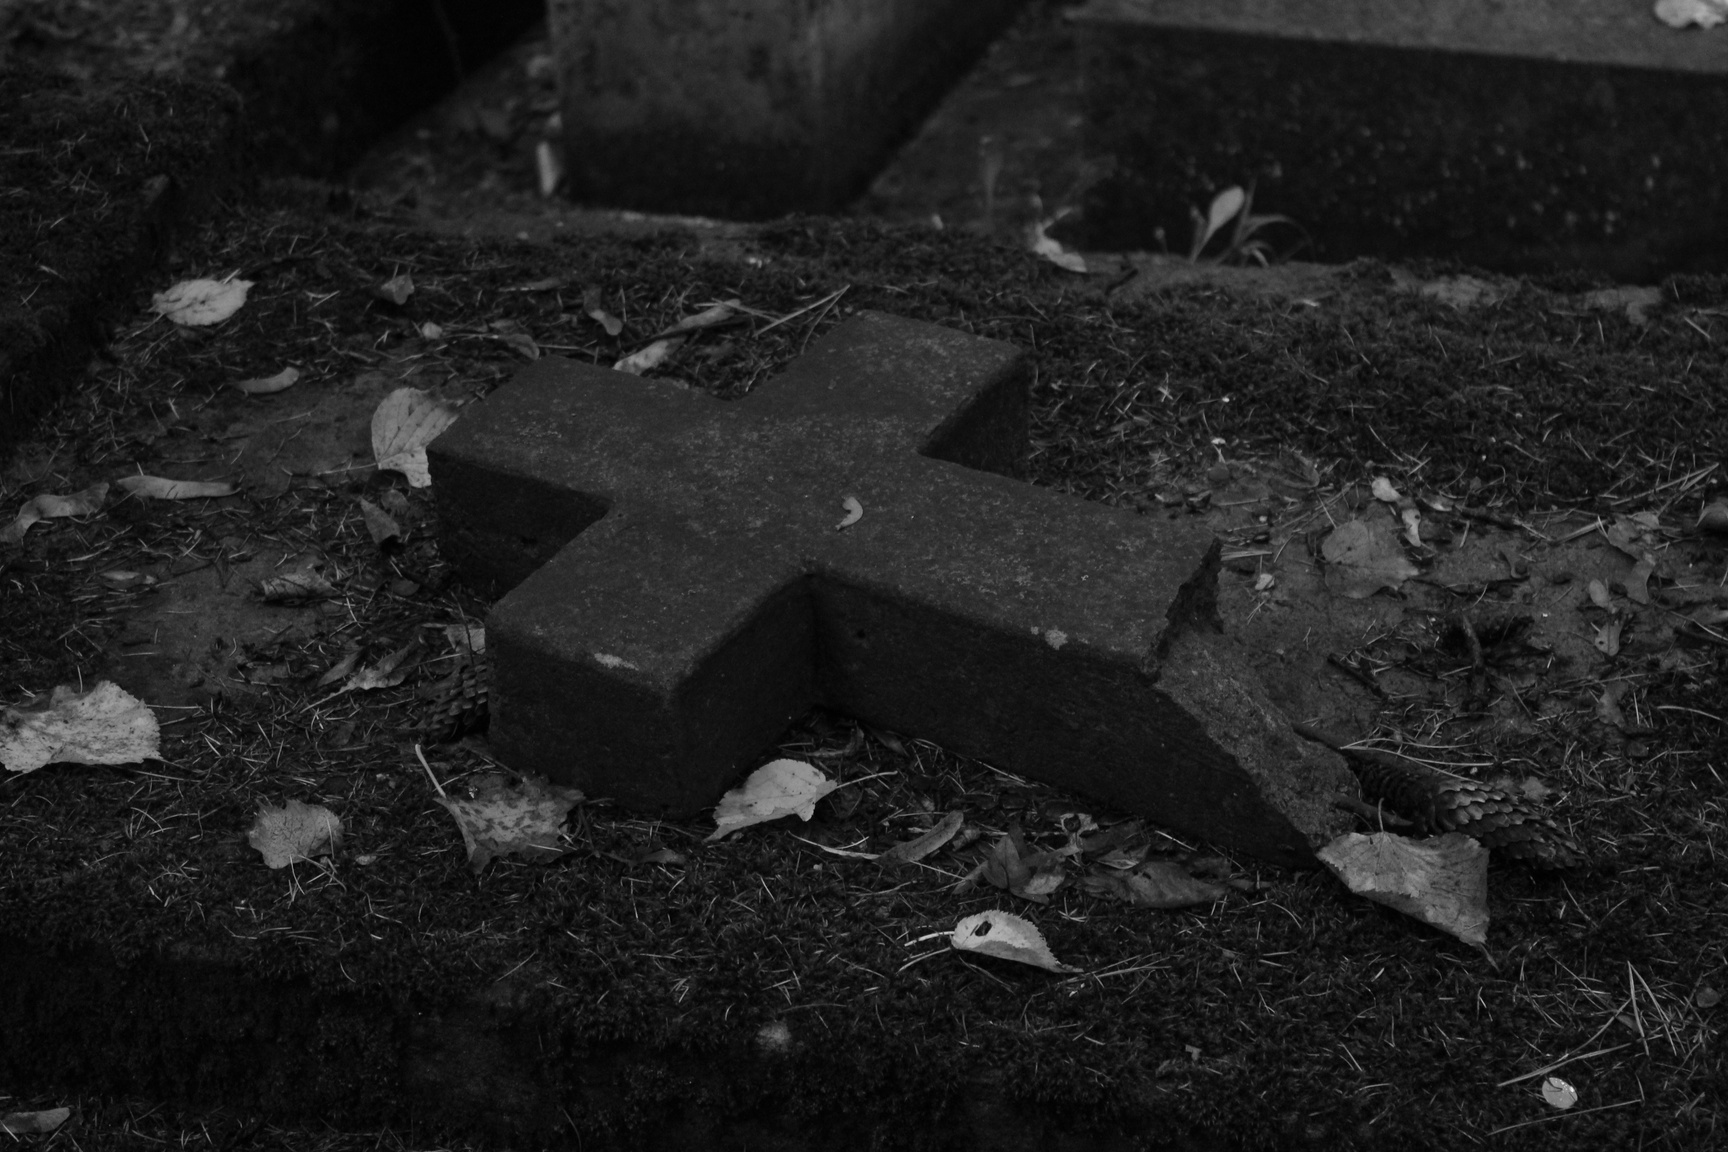 Horror/Cemetery